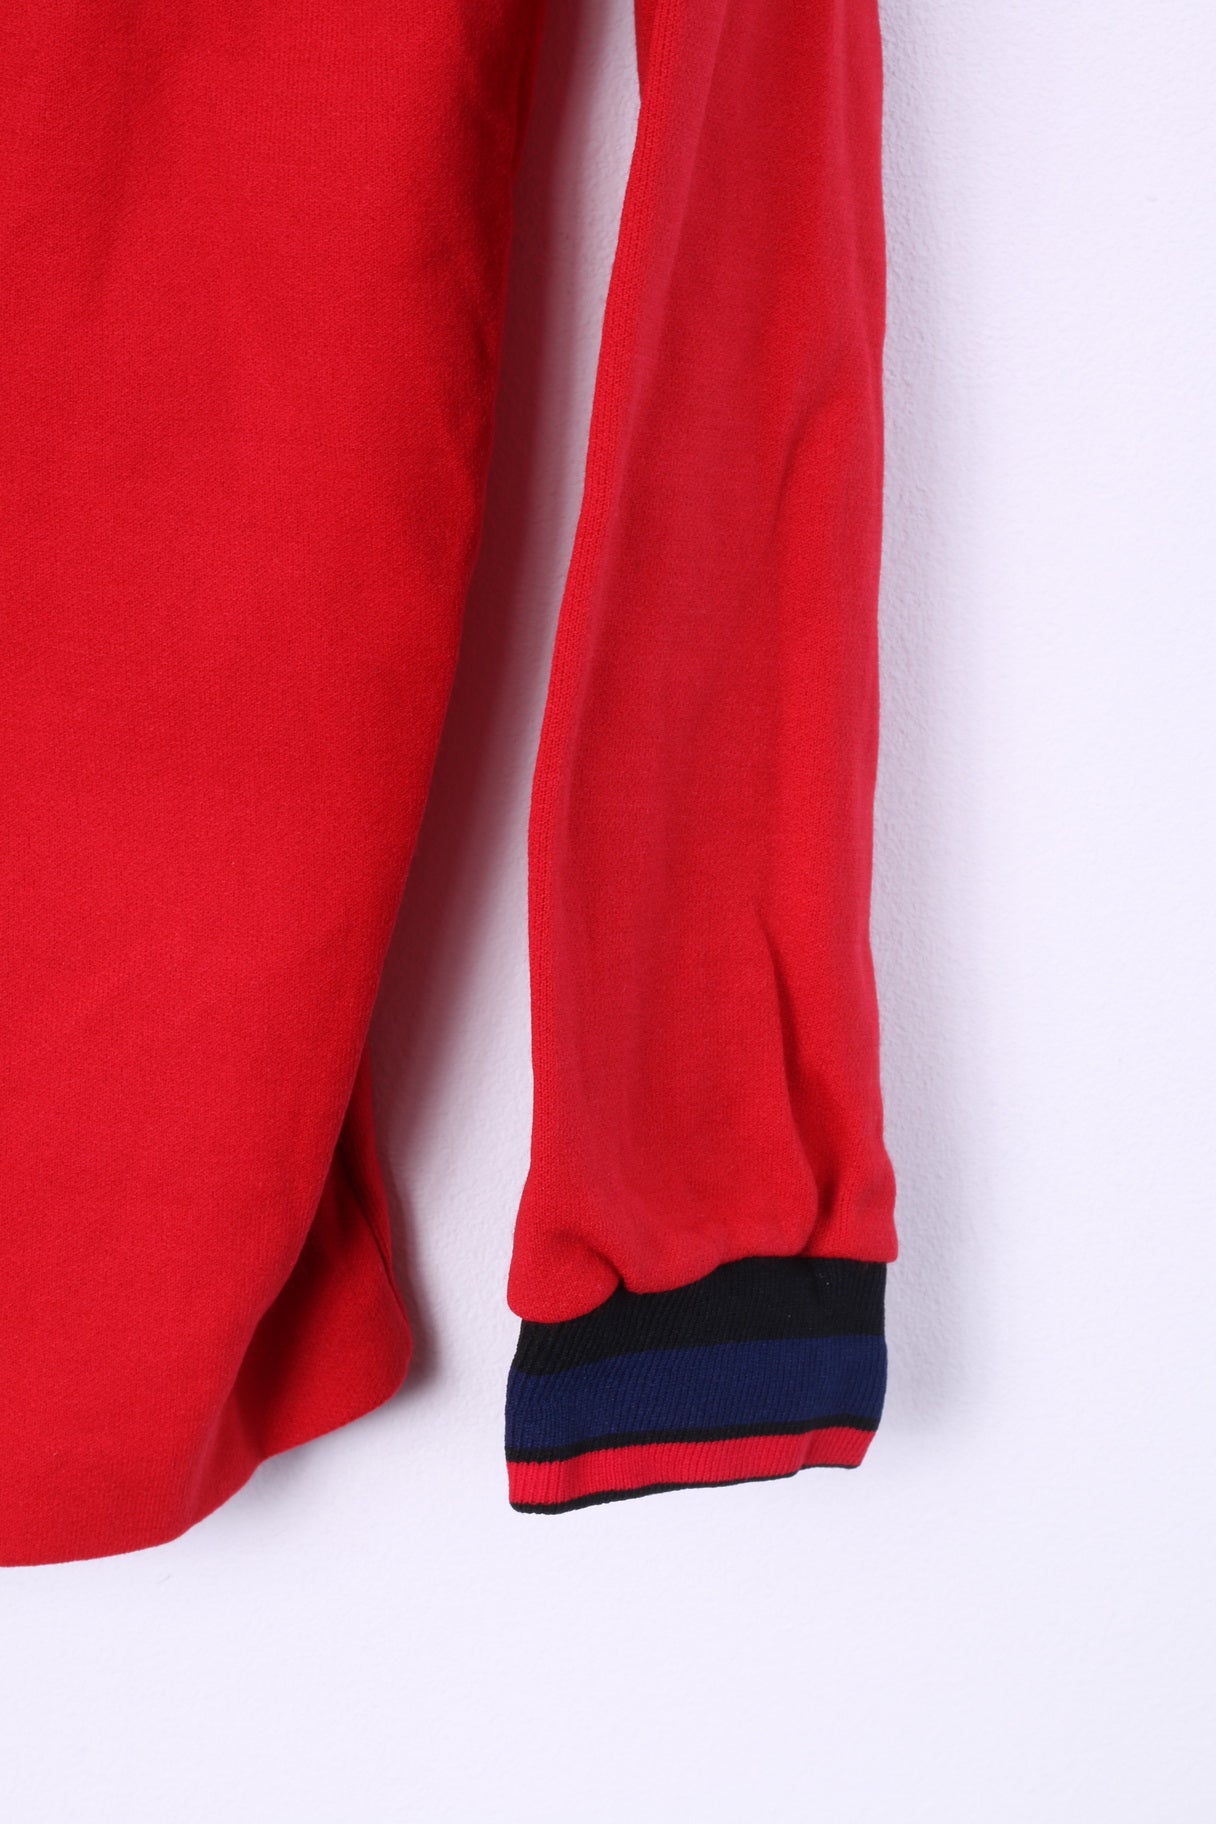 Sport Womens 44 XL Sweatshirt Jumper Red Full Zipper Sportswear